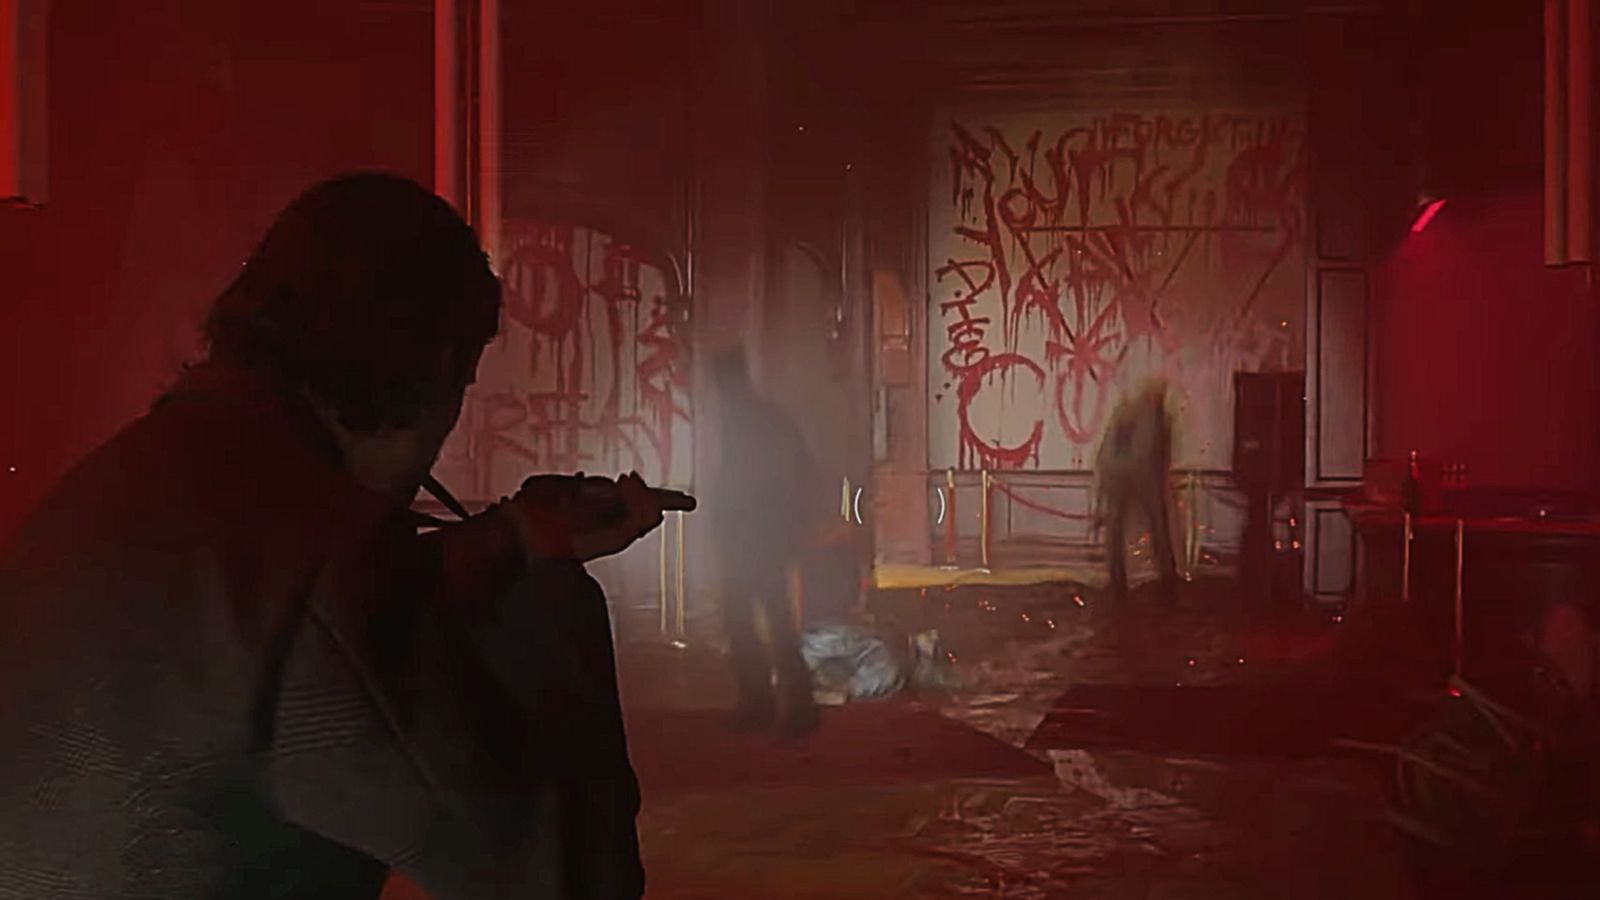 Alan Wake 2: Alan Wake holding a shotgun at some shadows, stood in front of red graffiti